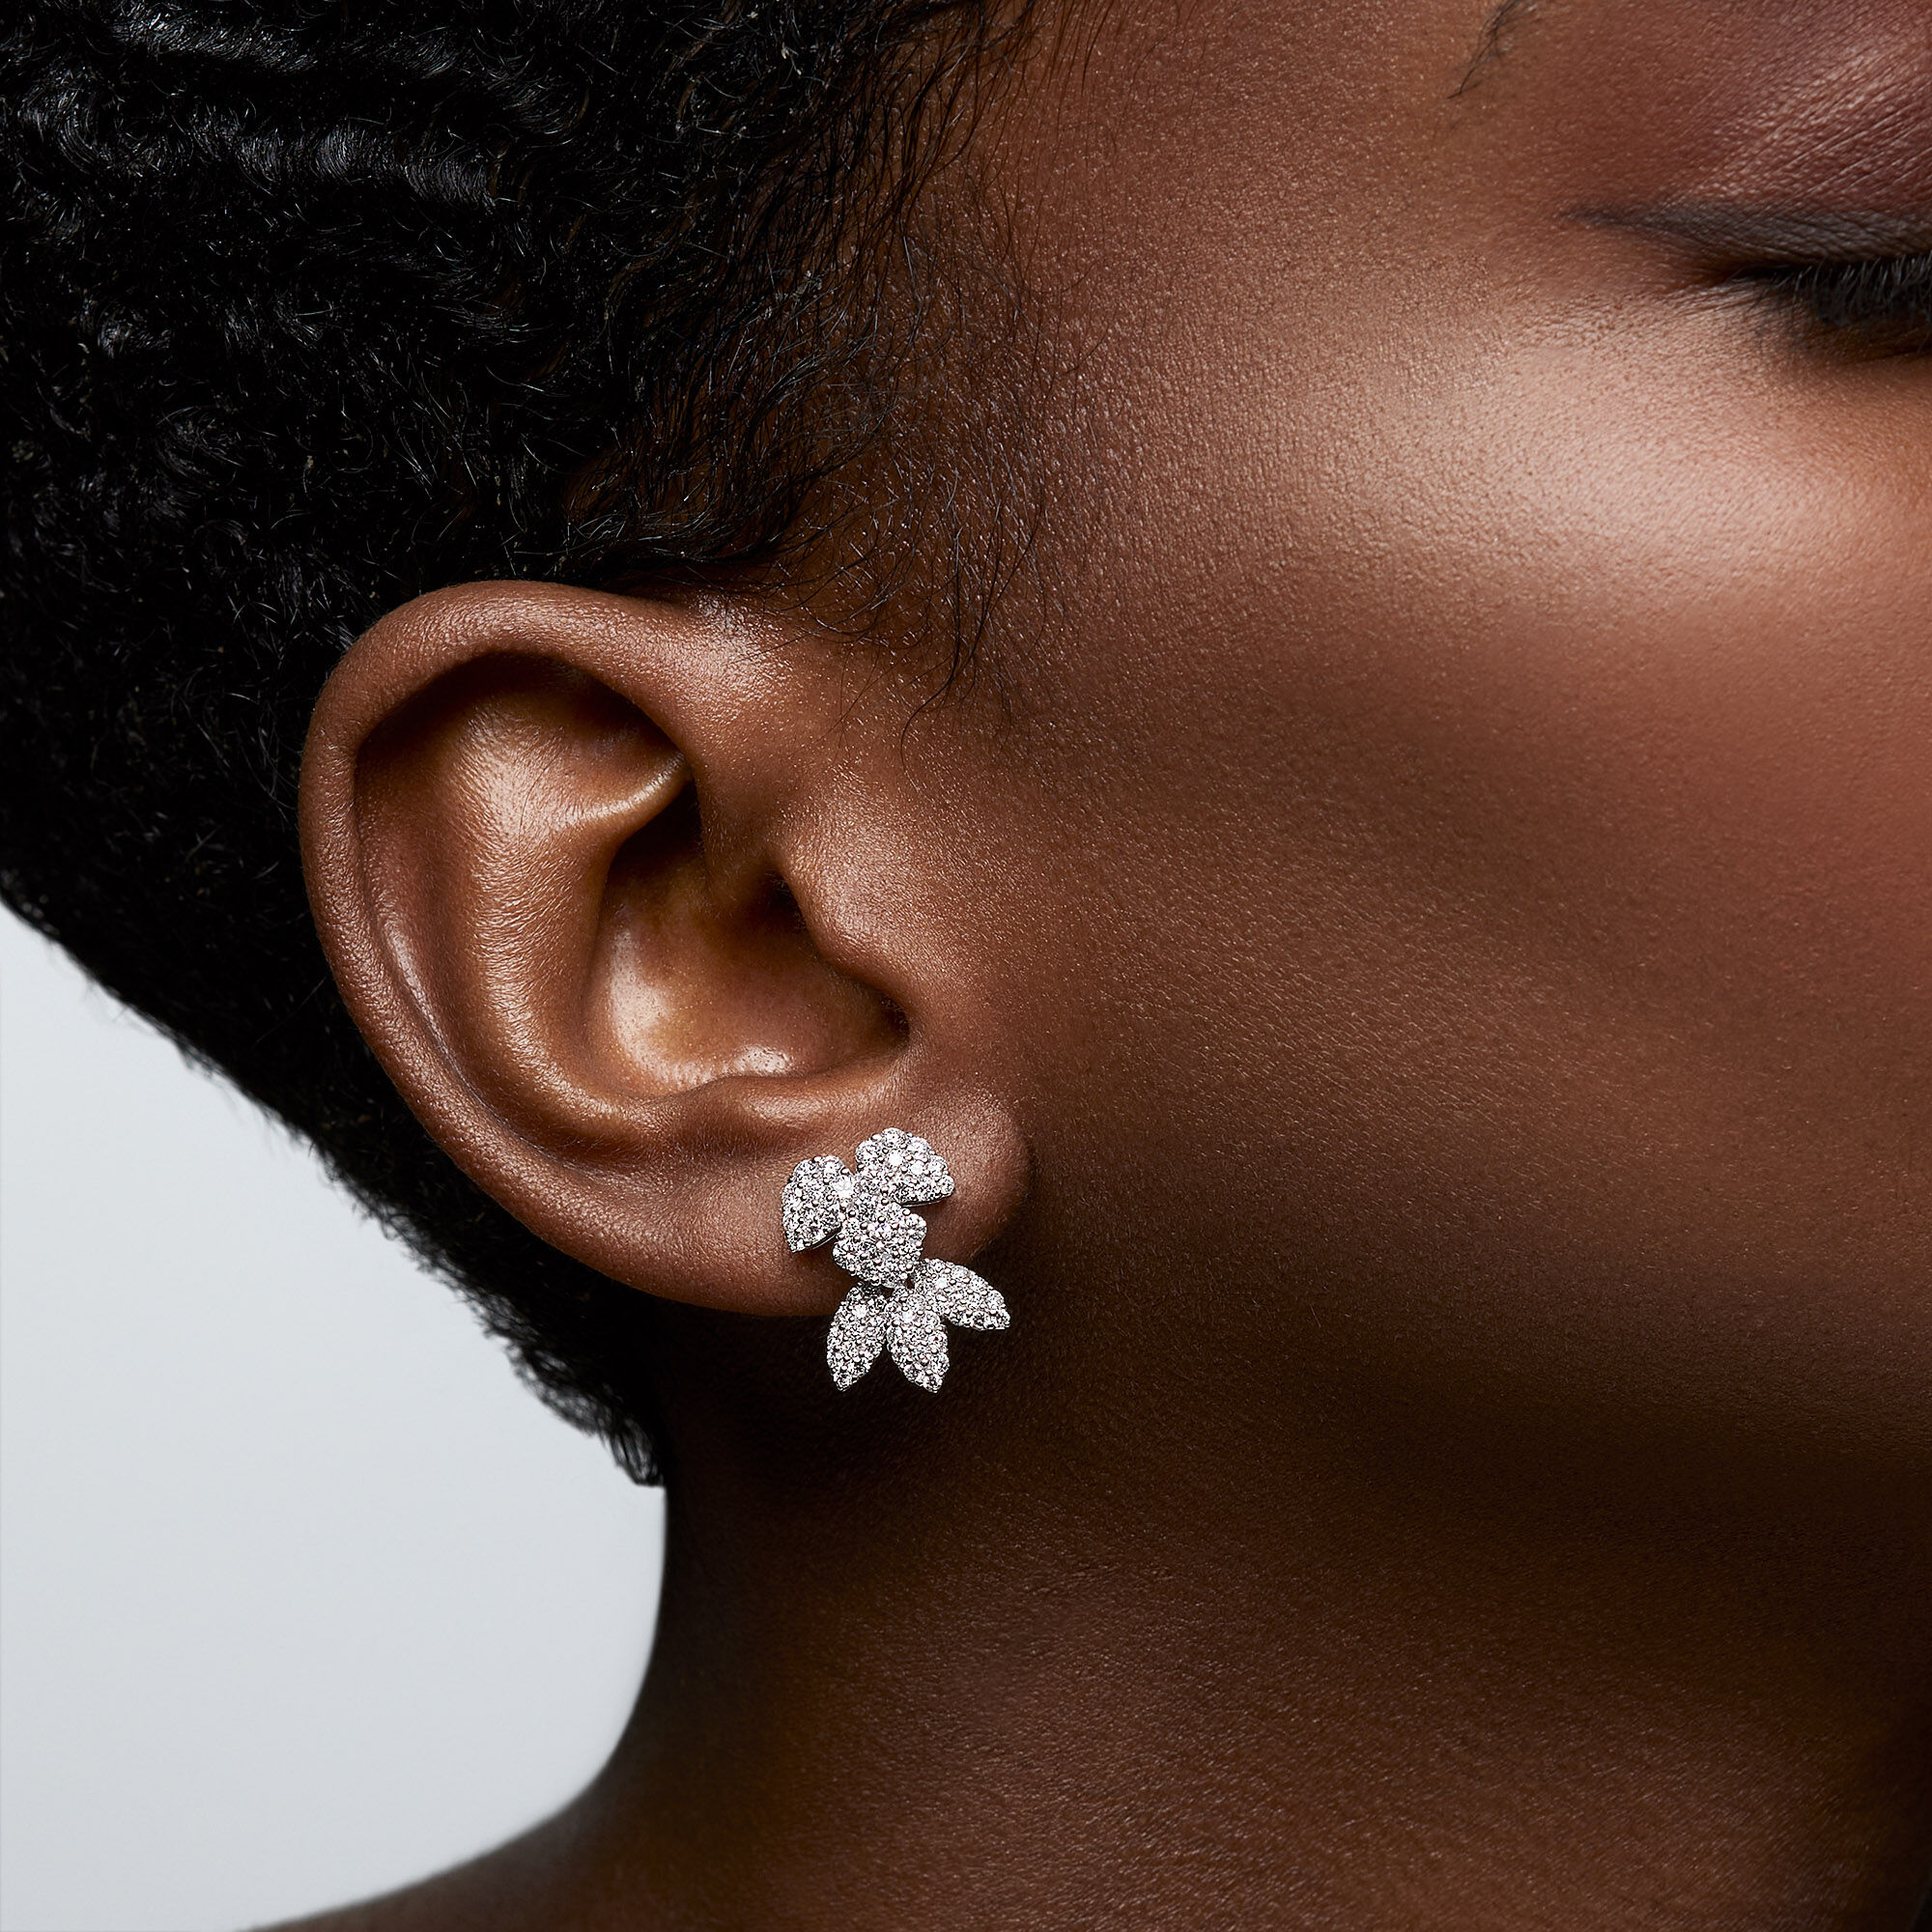 Birks Snowflake | Diamond Earrings in White Gold